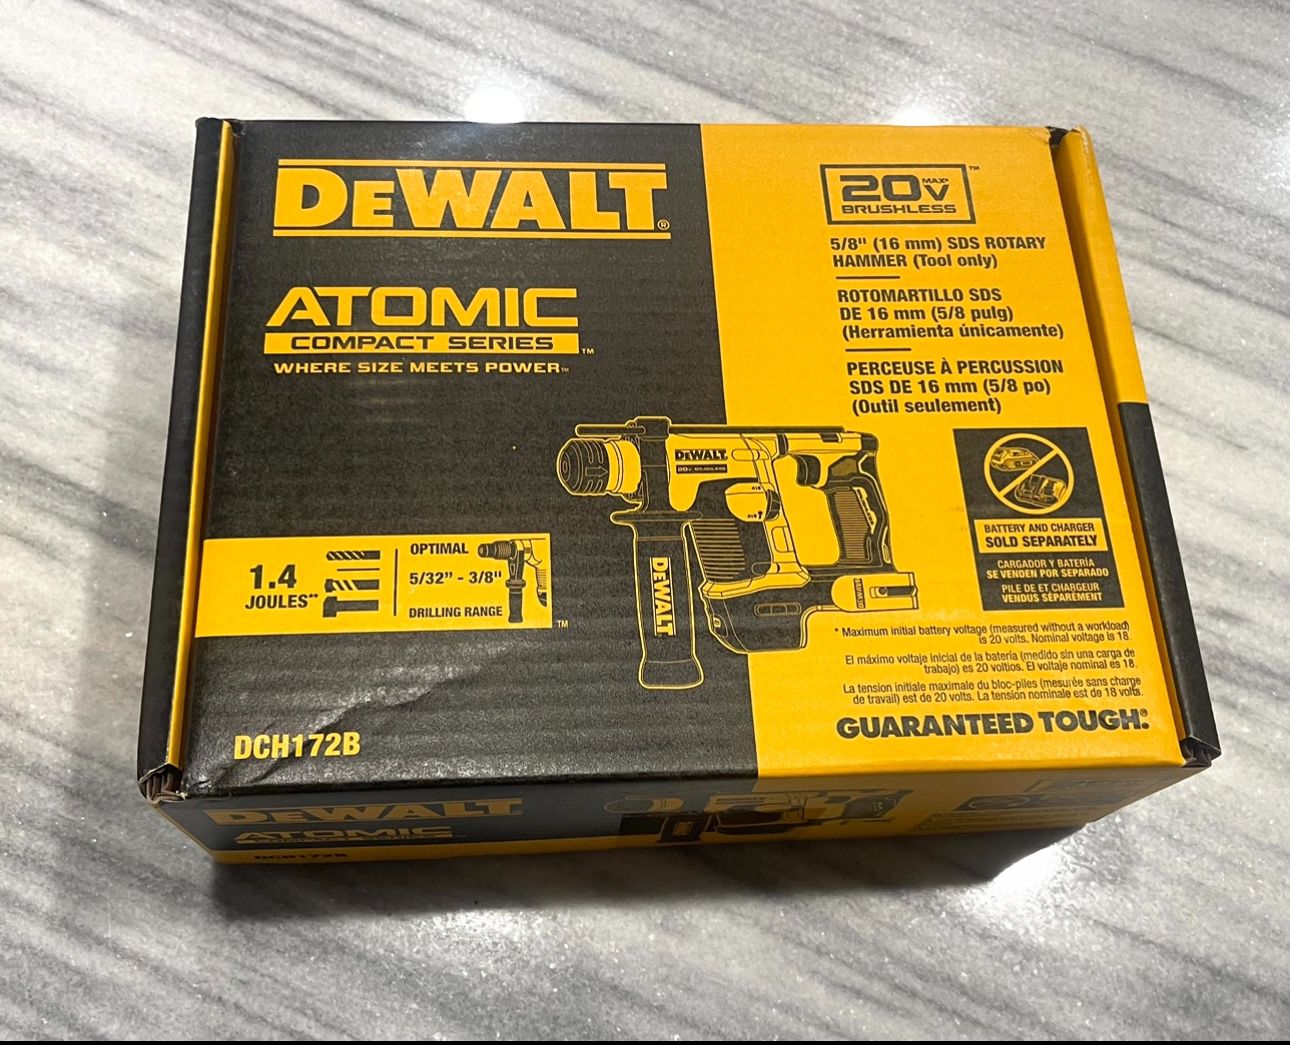 Brand New DeWALT DCH172B 20V MAX ATOMIC 5/8" Brushless SDS Plus Rotary Hammer - Tool Only